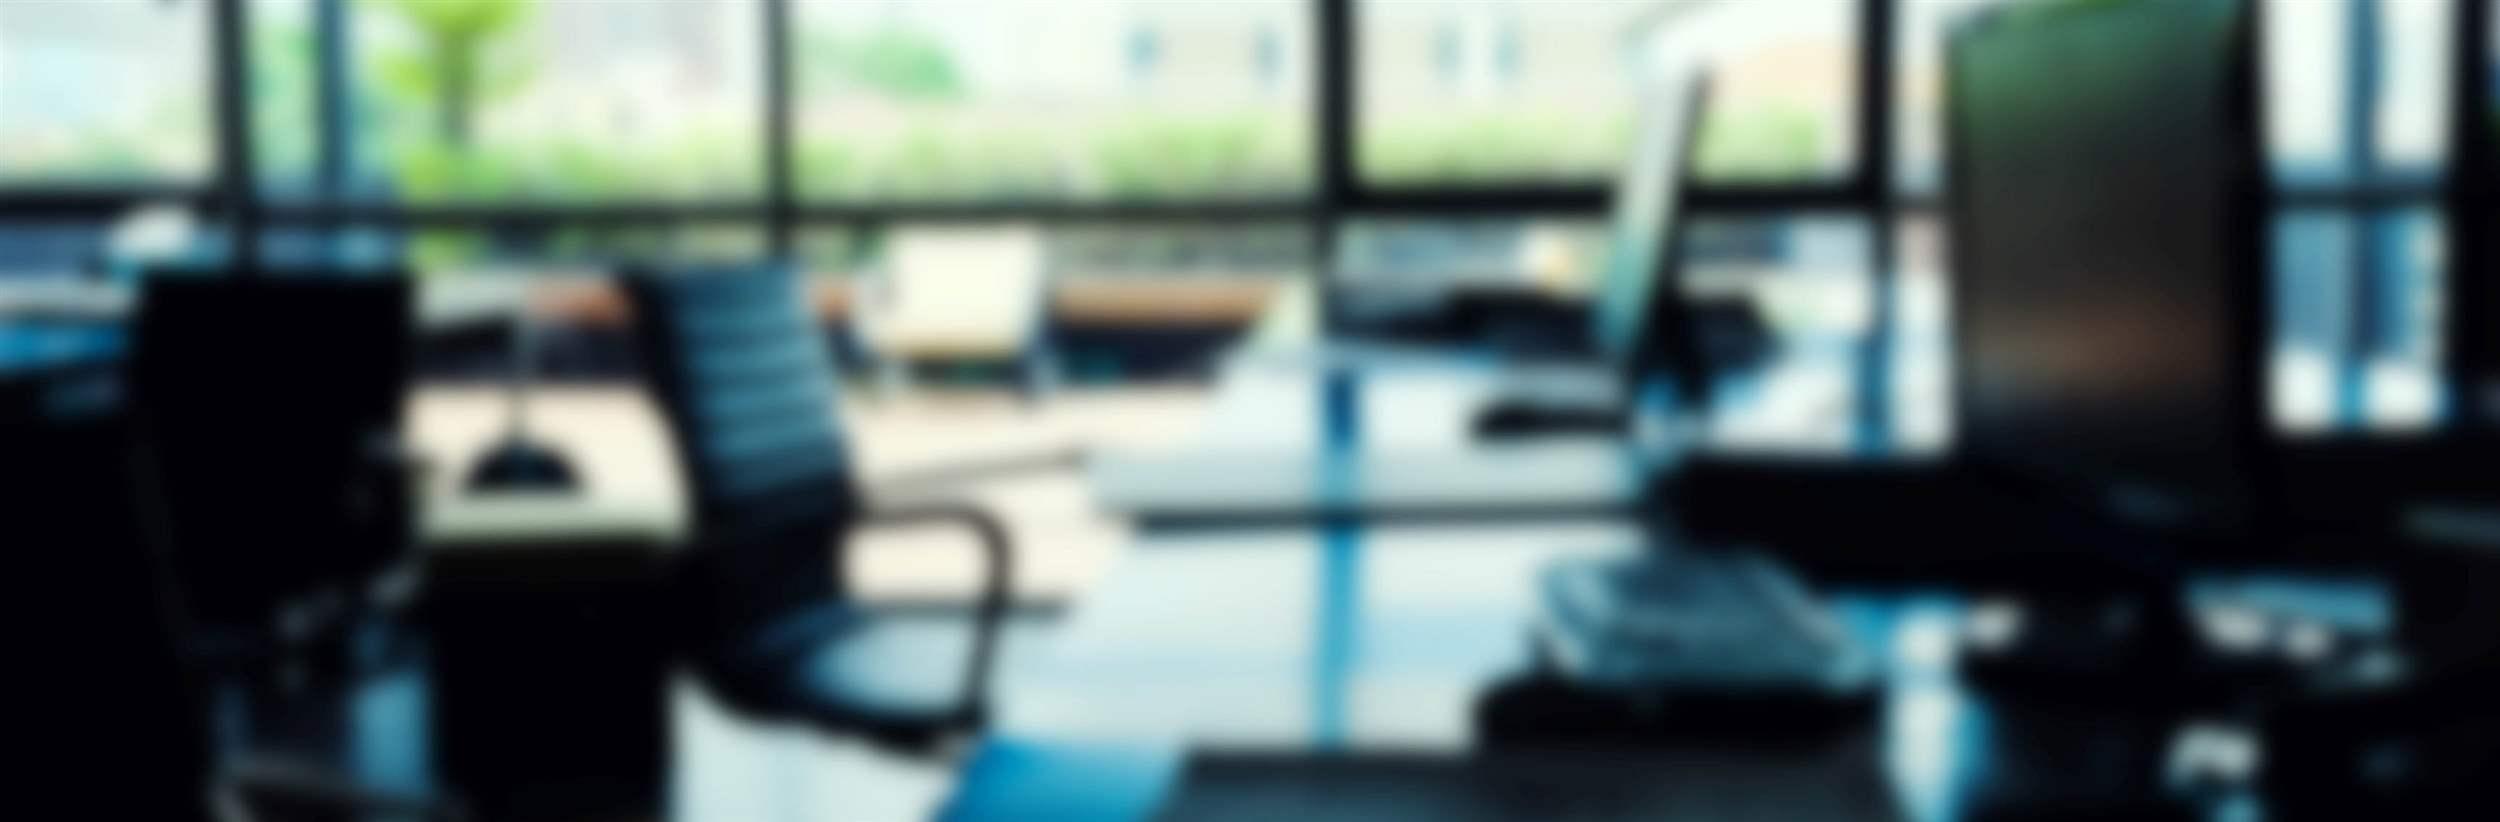 Abstract blur modern office interior background